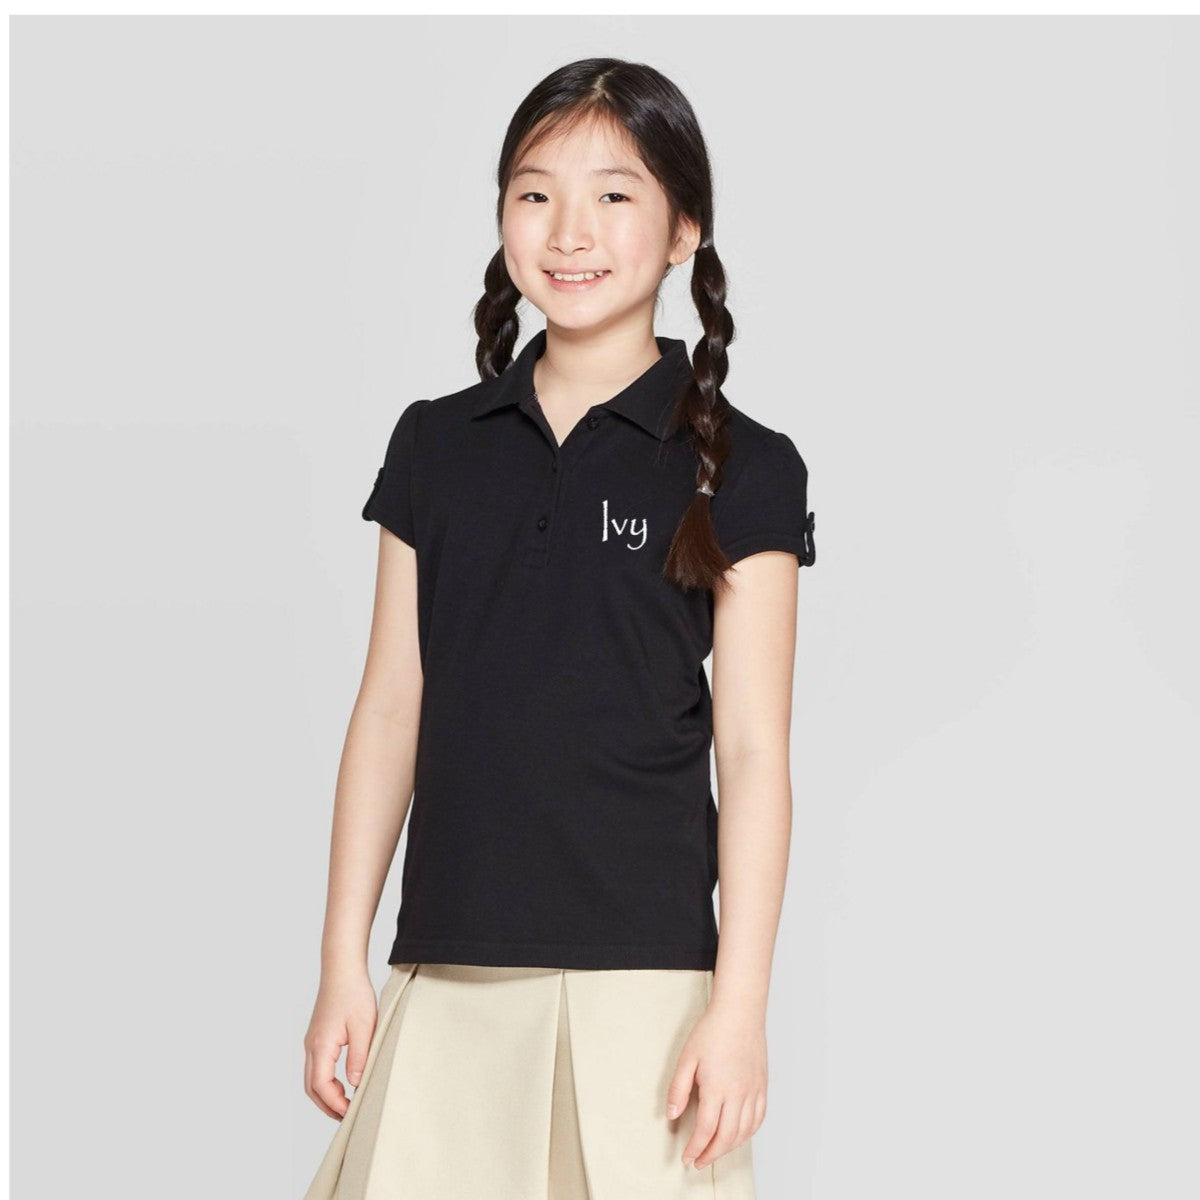 Seeds Academy Uniform-Girls short sleeve polo (black)